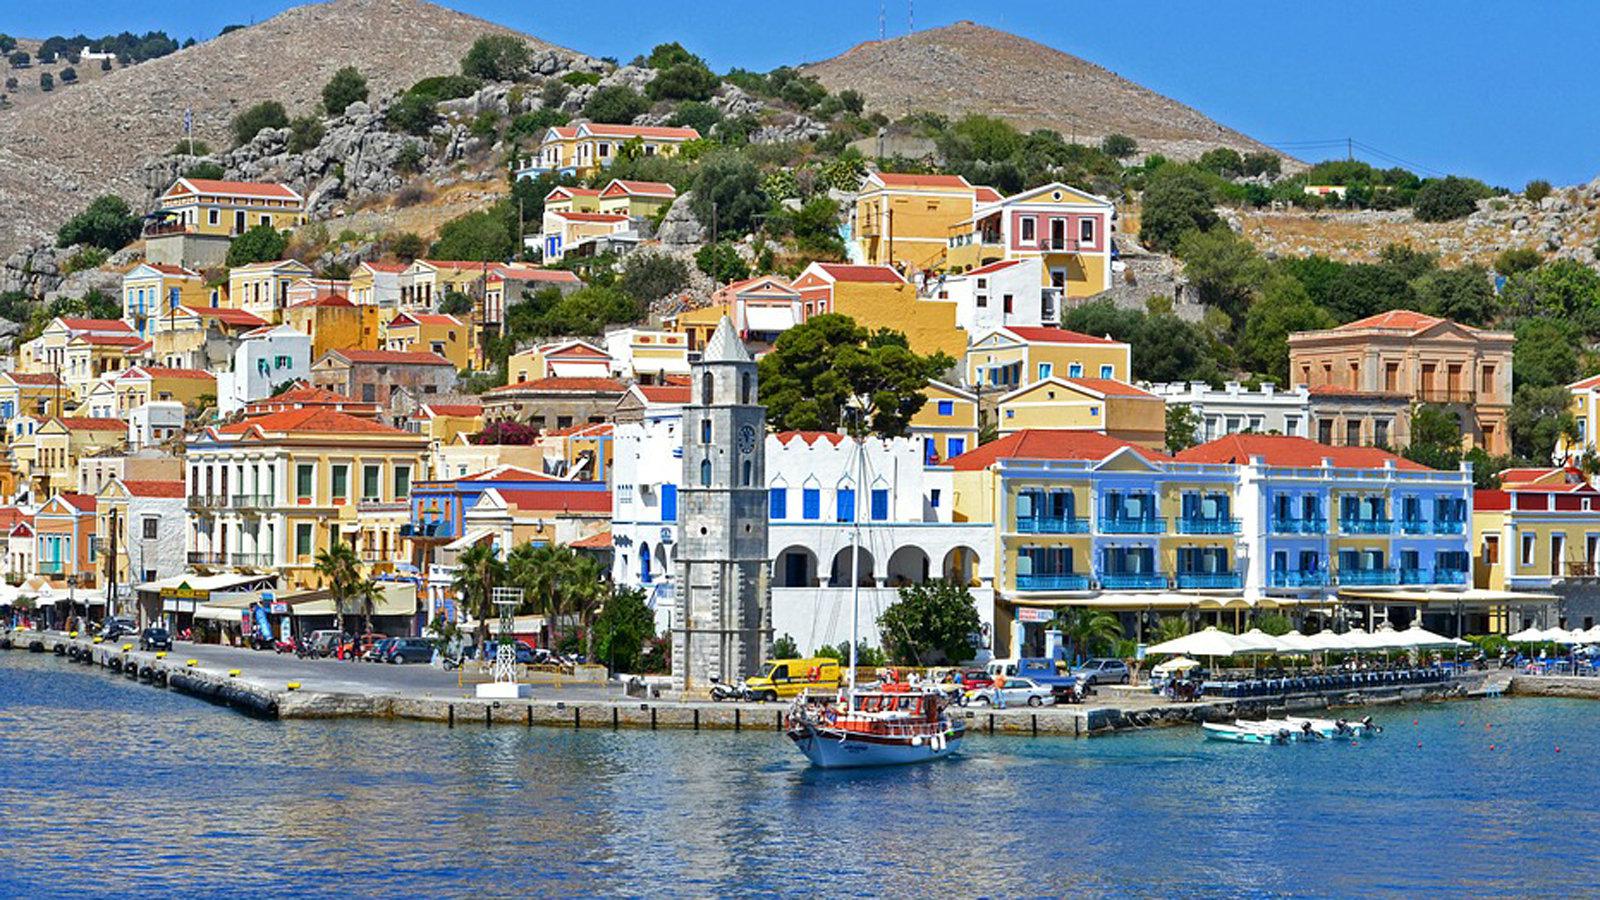 BBC Ανατροπή δεν θα προστεθούν ελληνικά νησιά ή νέες χώρες στην πράσινη ταξιδιωτική λίστα της Βρετανίας